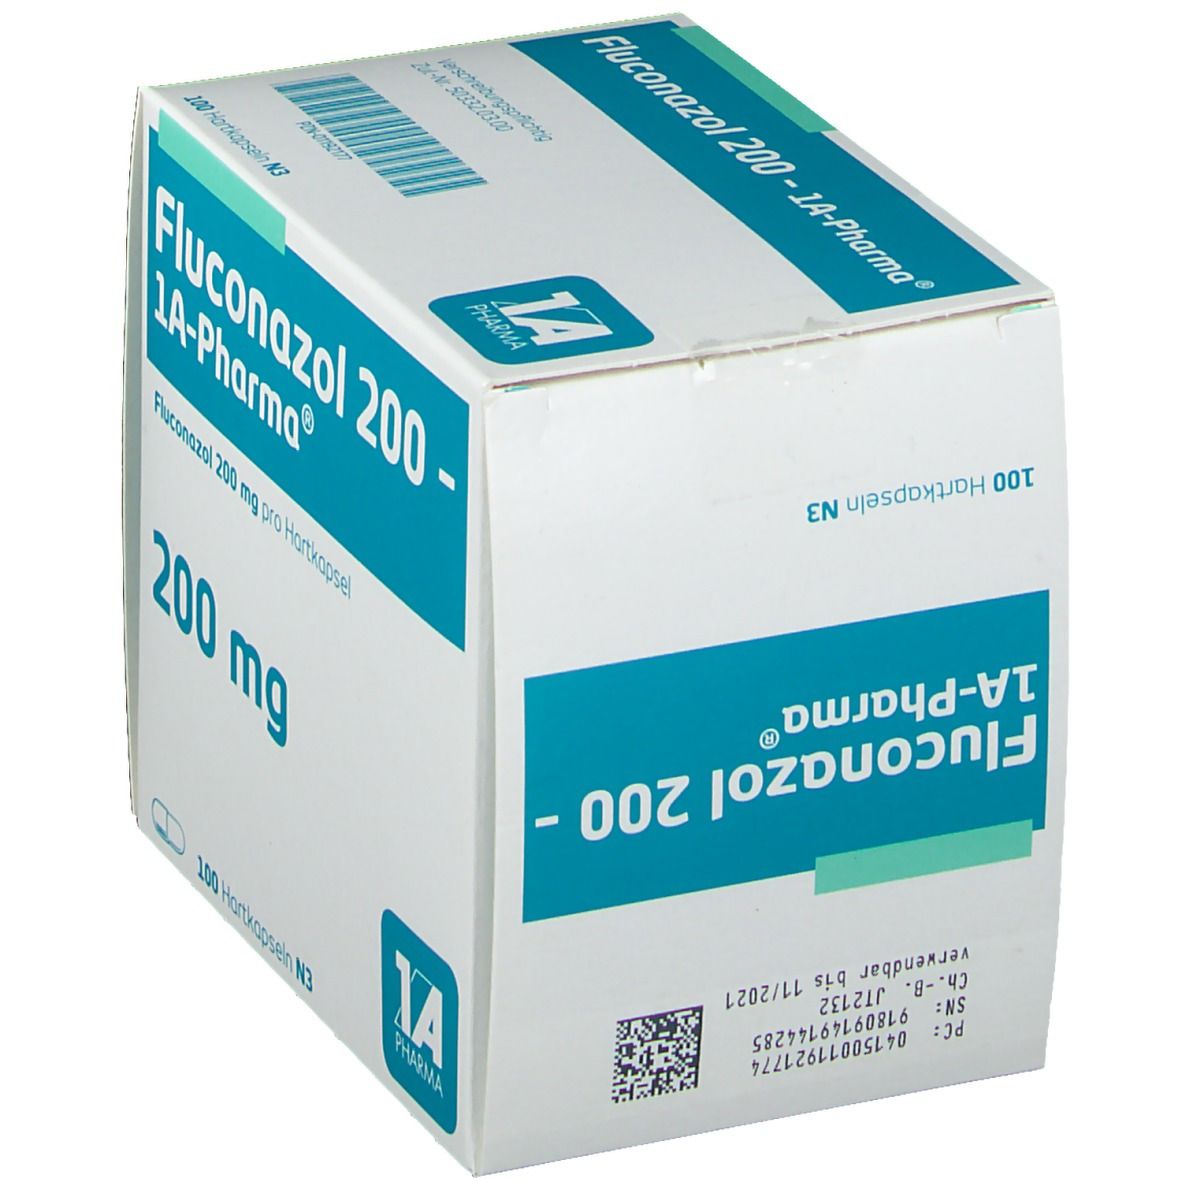 Fluconazol 200 - 1 A Pharma®